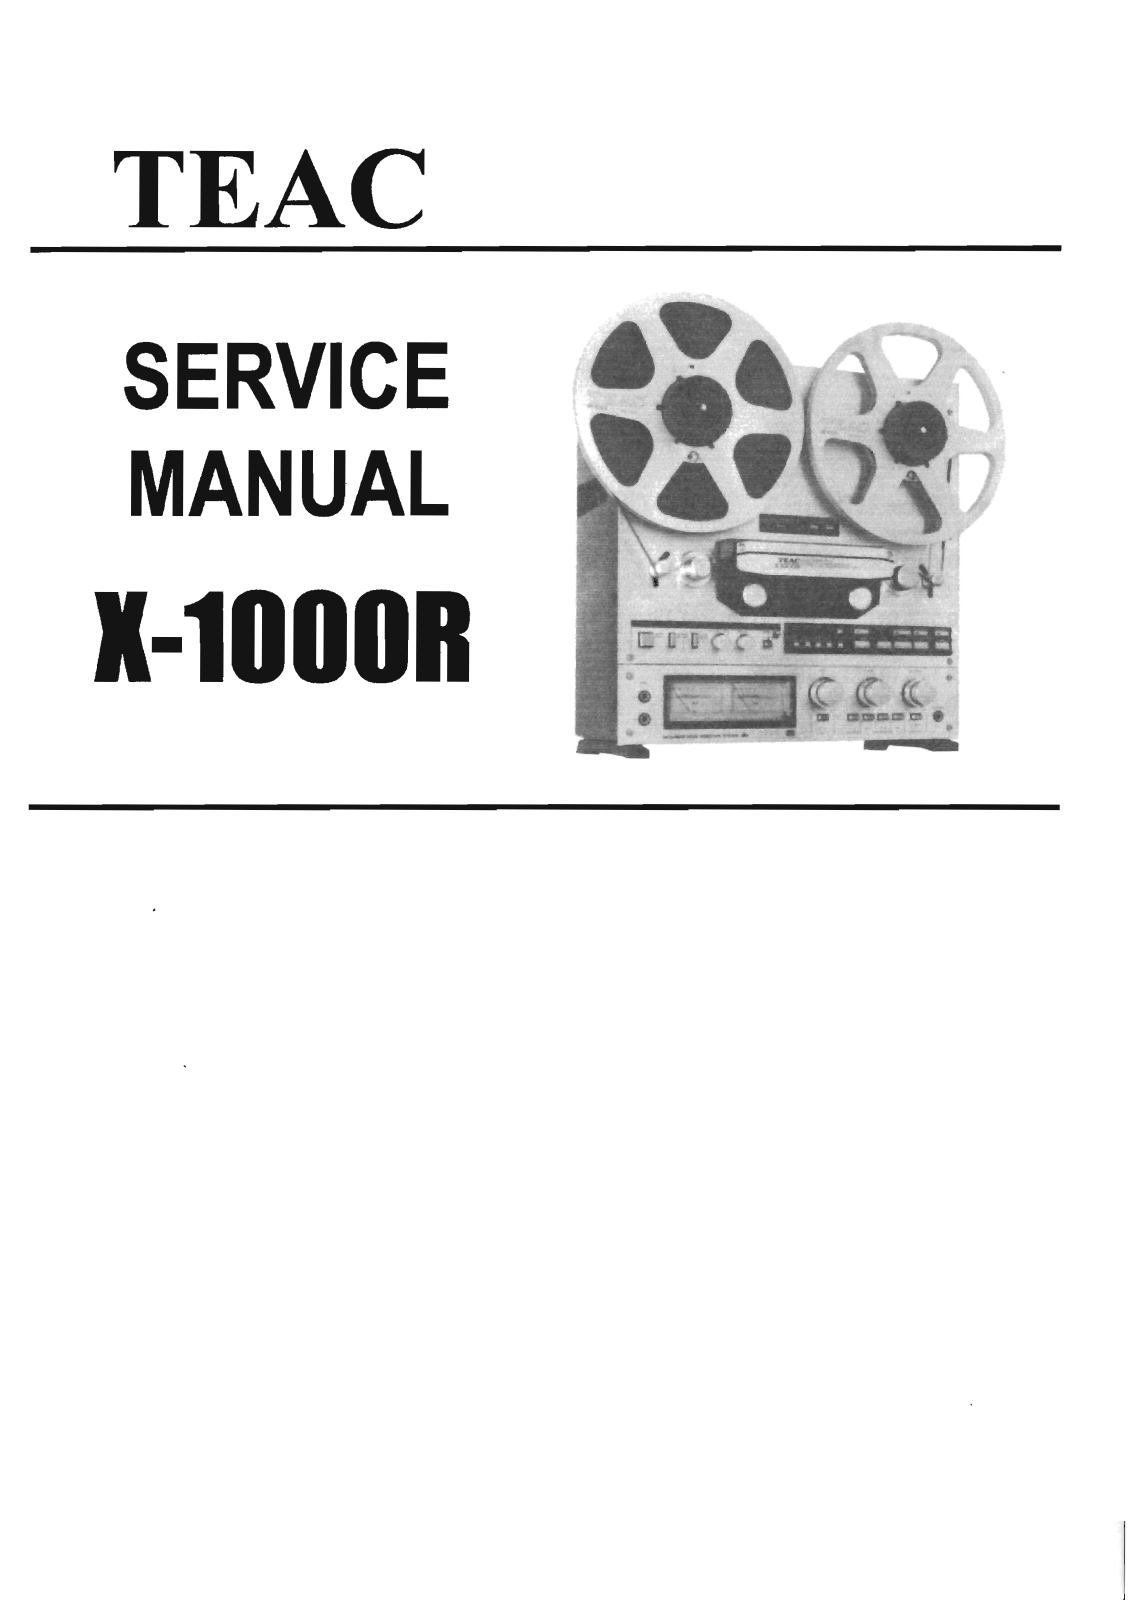 Teac X-1000R Service Manual